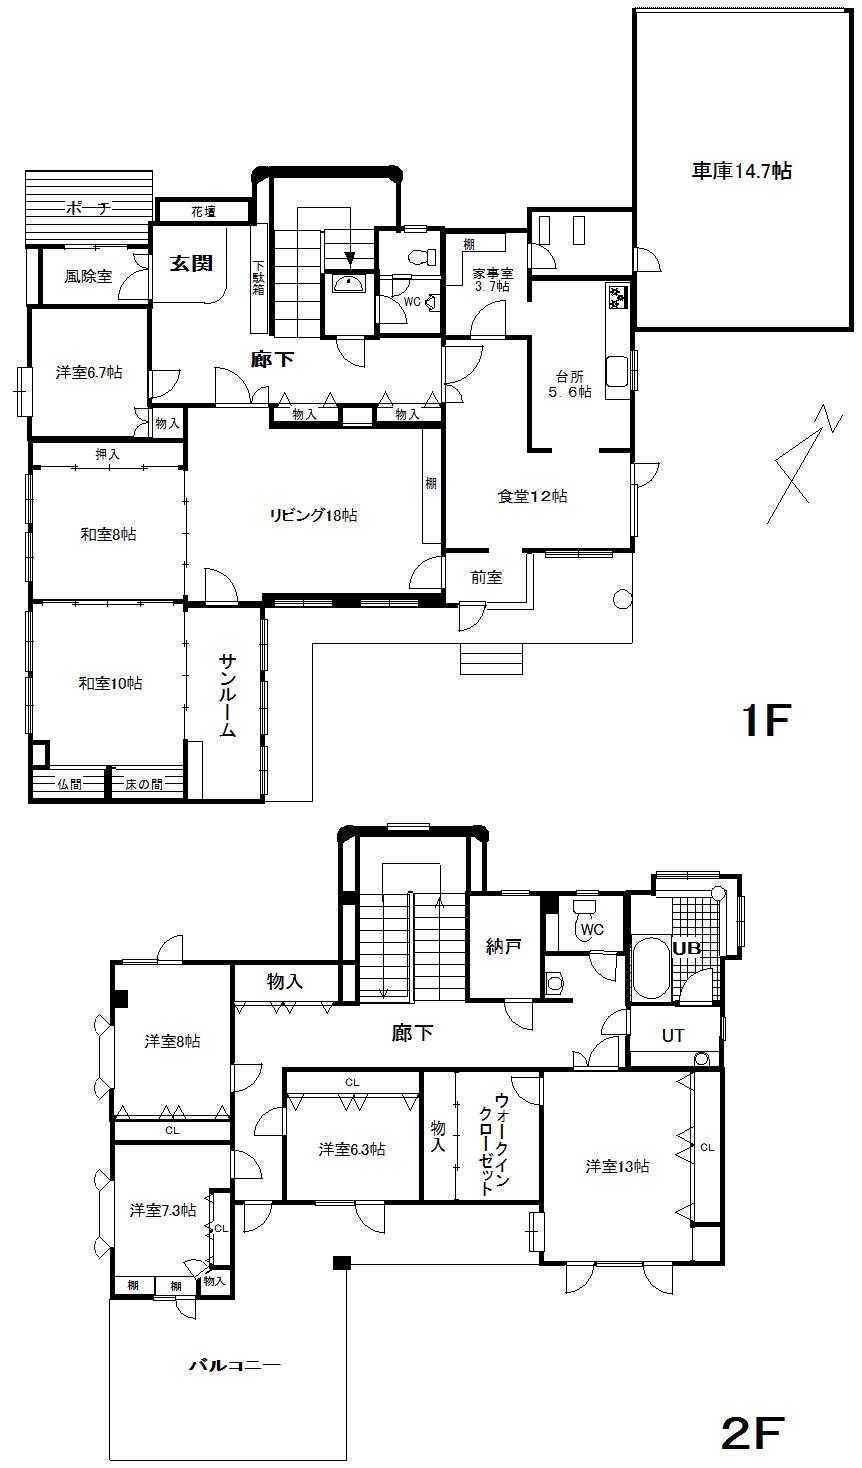 Floor plan. 23.5 million yen, 7LDK + S (storeroom), Land area 558.86 sq m , Building area 365.28 sq m